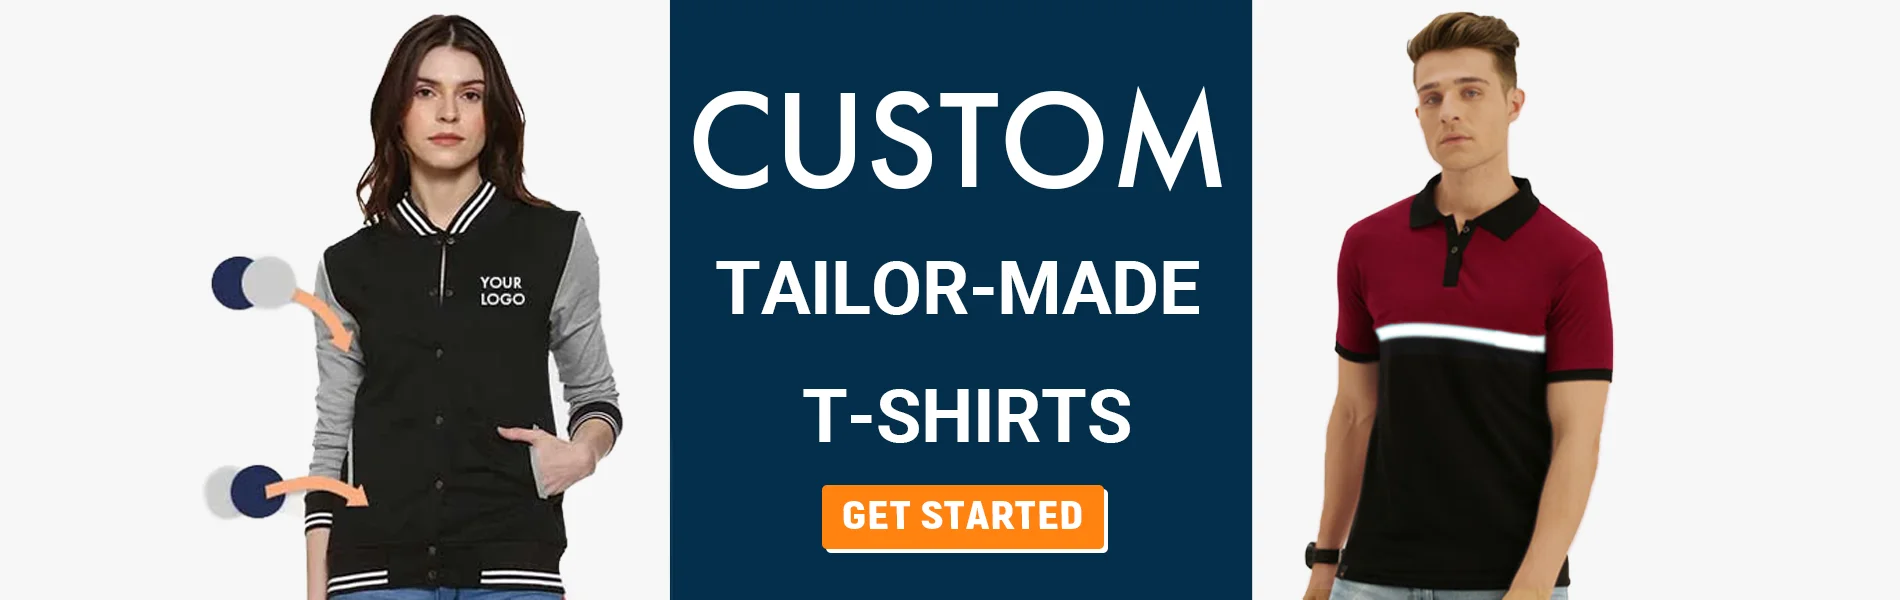 custom tailormade t-shirts ranchi